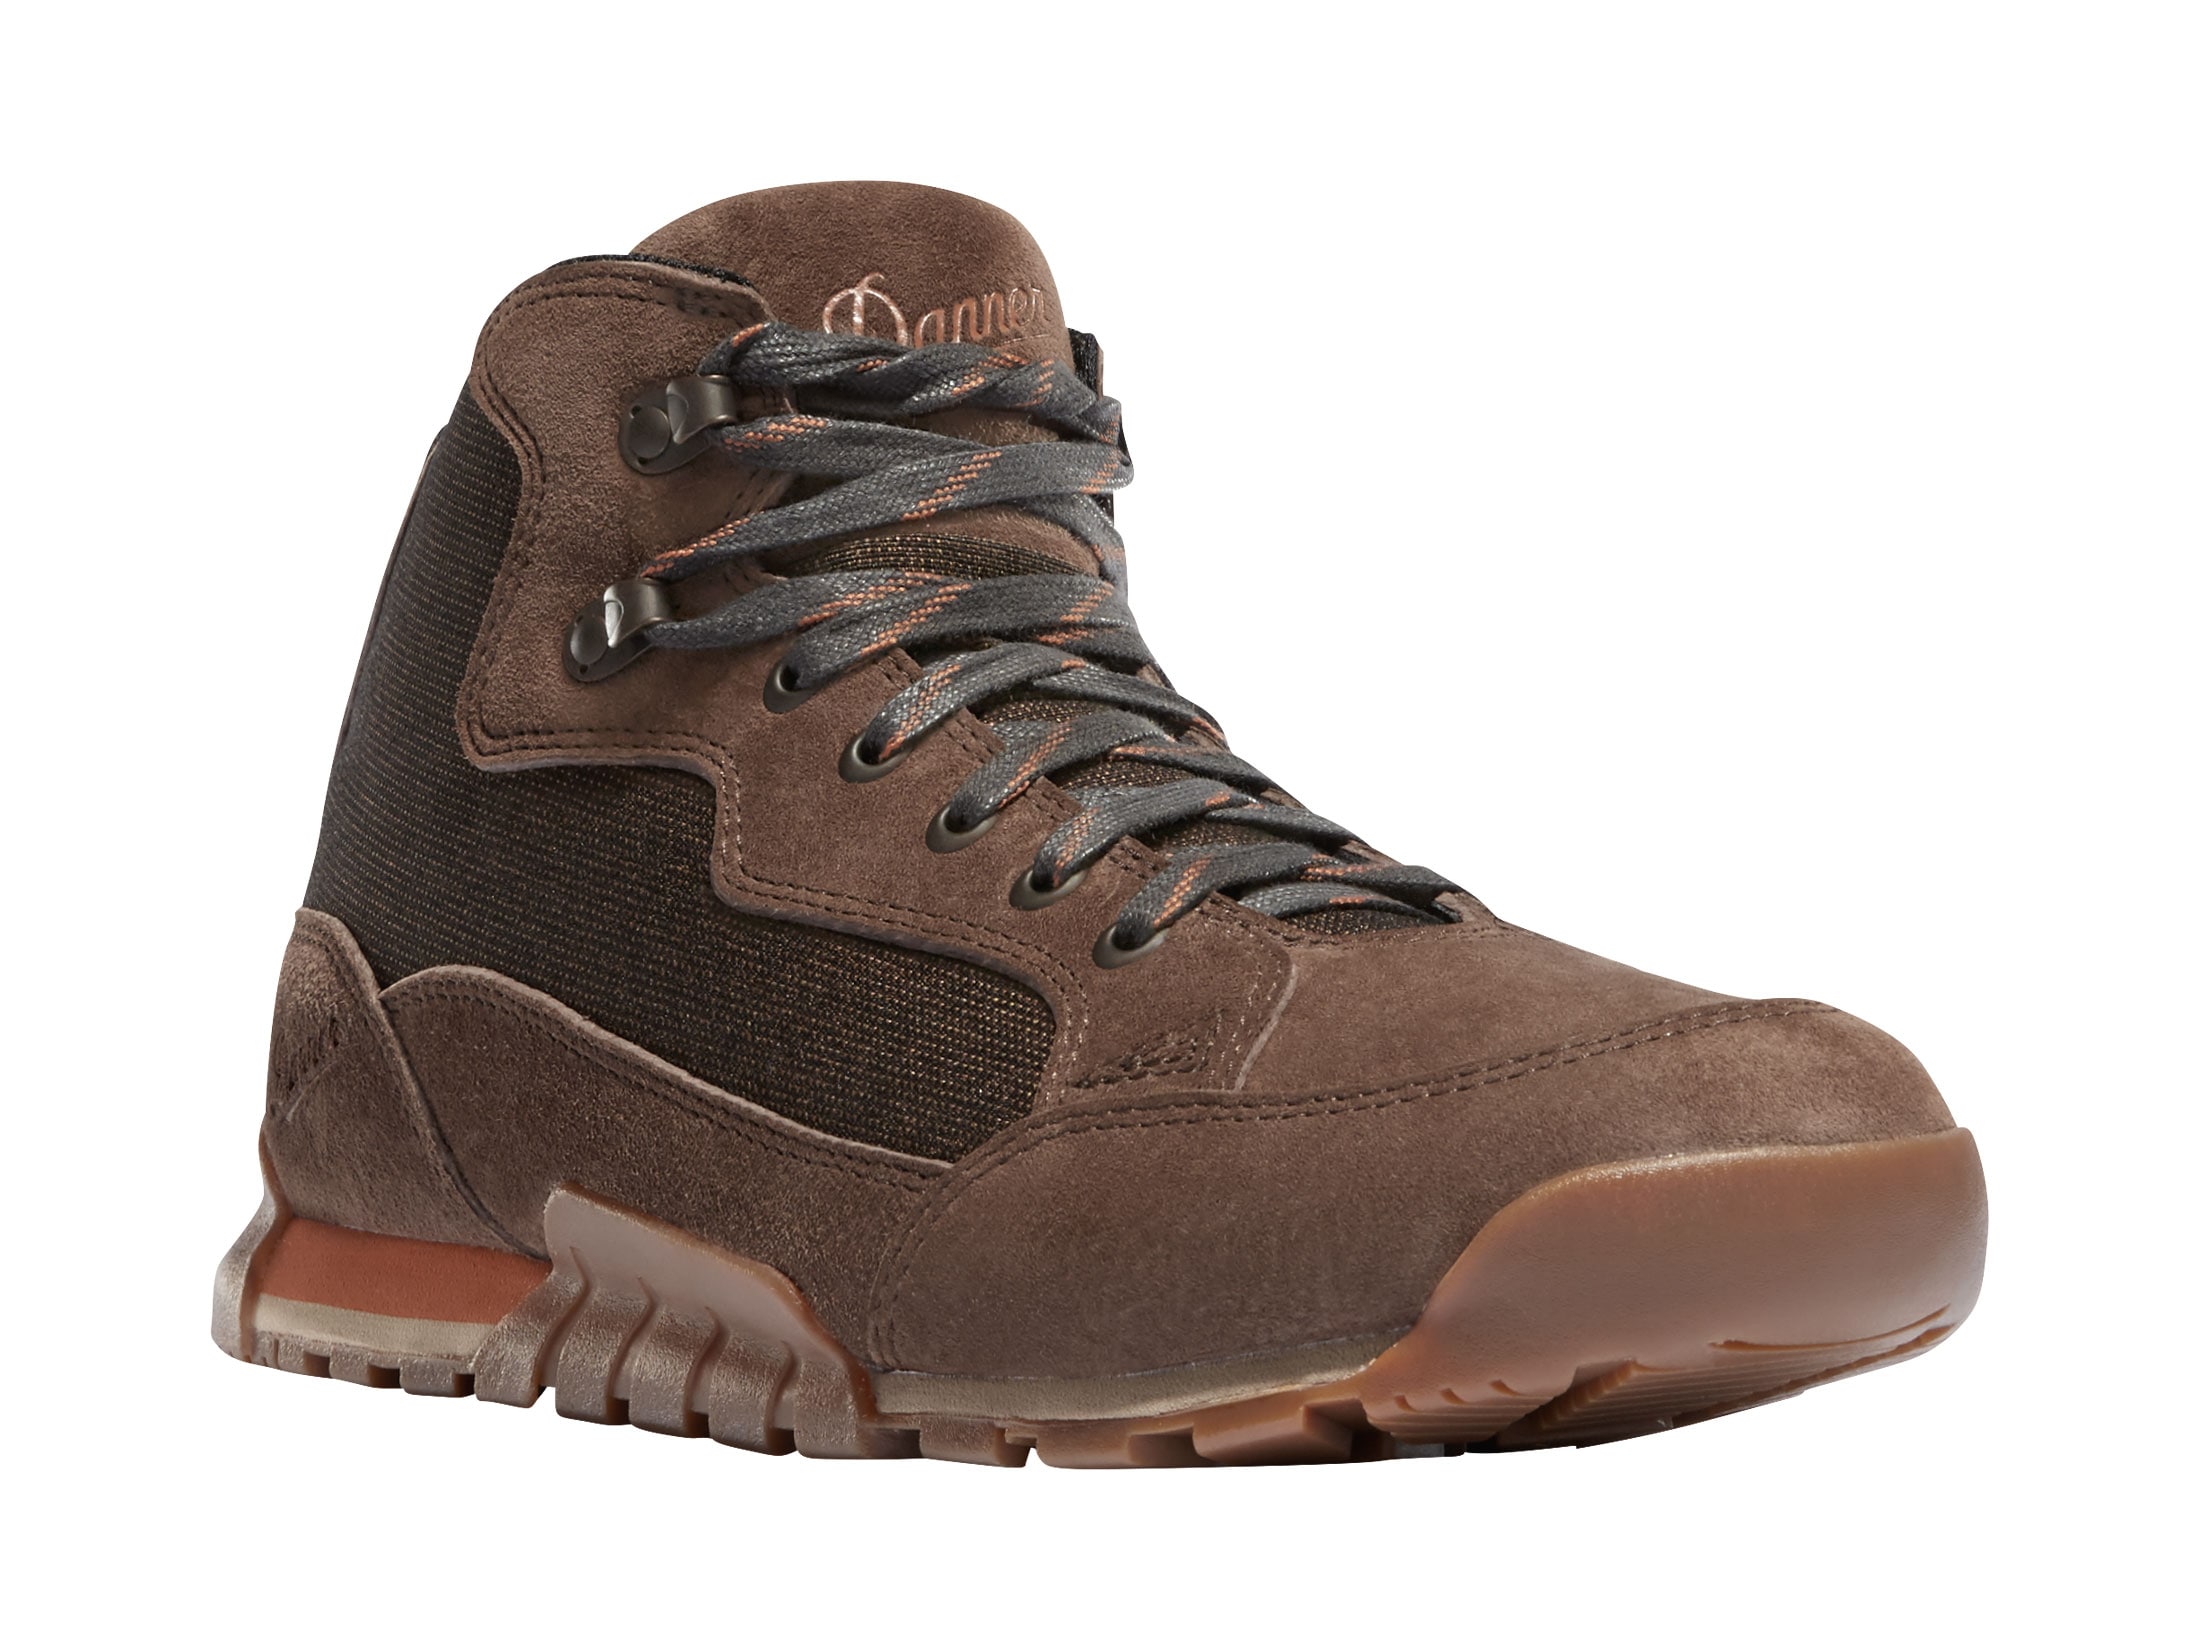 Danner Skyridge 4.5 Hiking Boots Suede/Nylon Dark Earth Men's 8 D